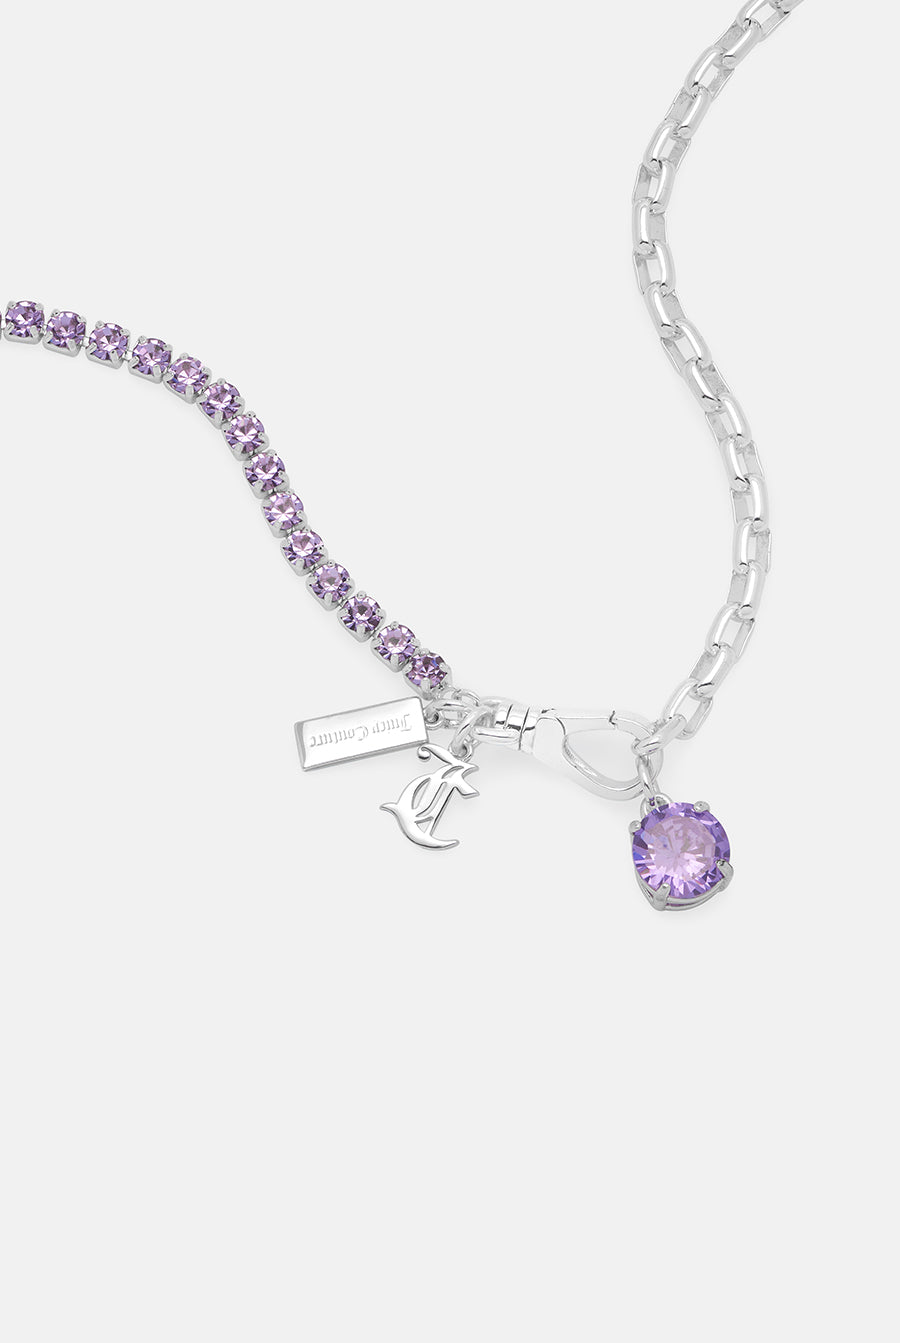 Violette sterling silver necklace pendant in purple